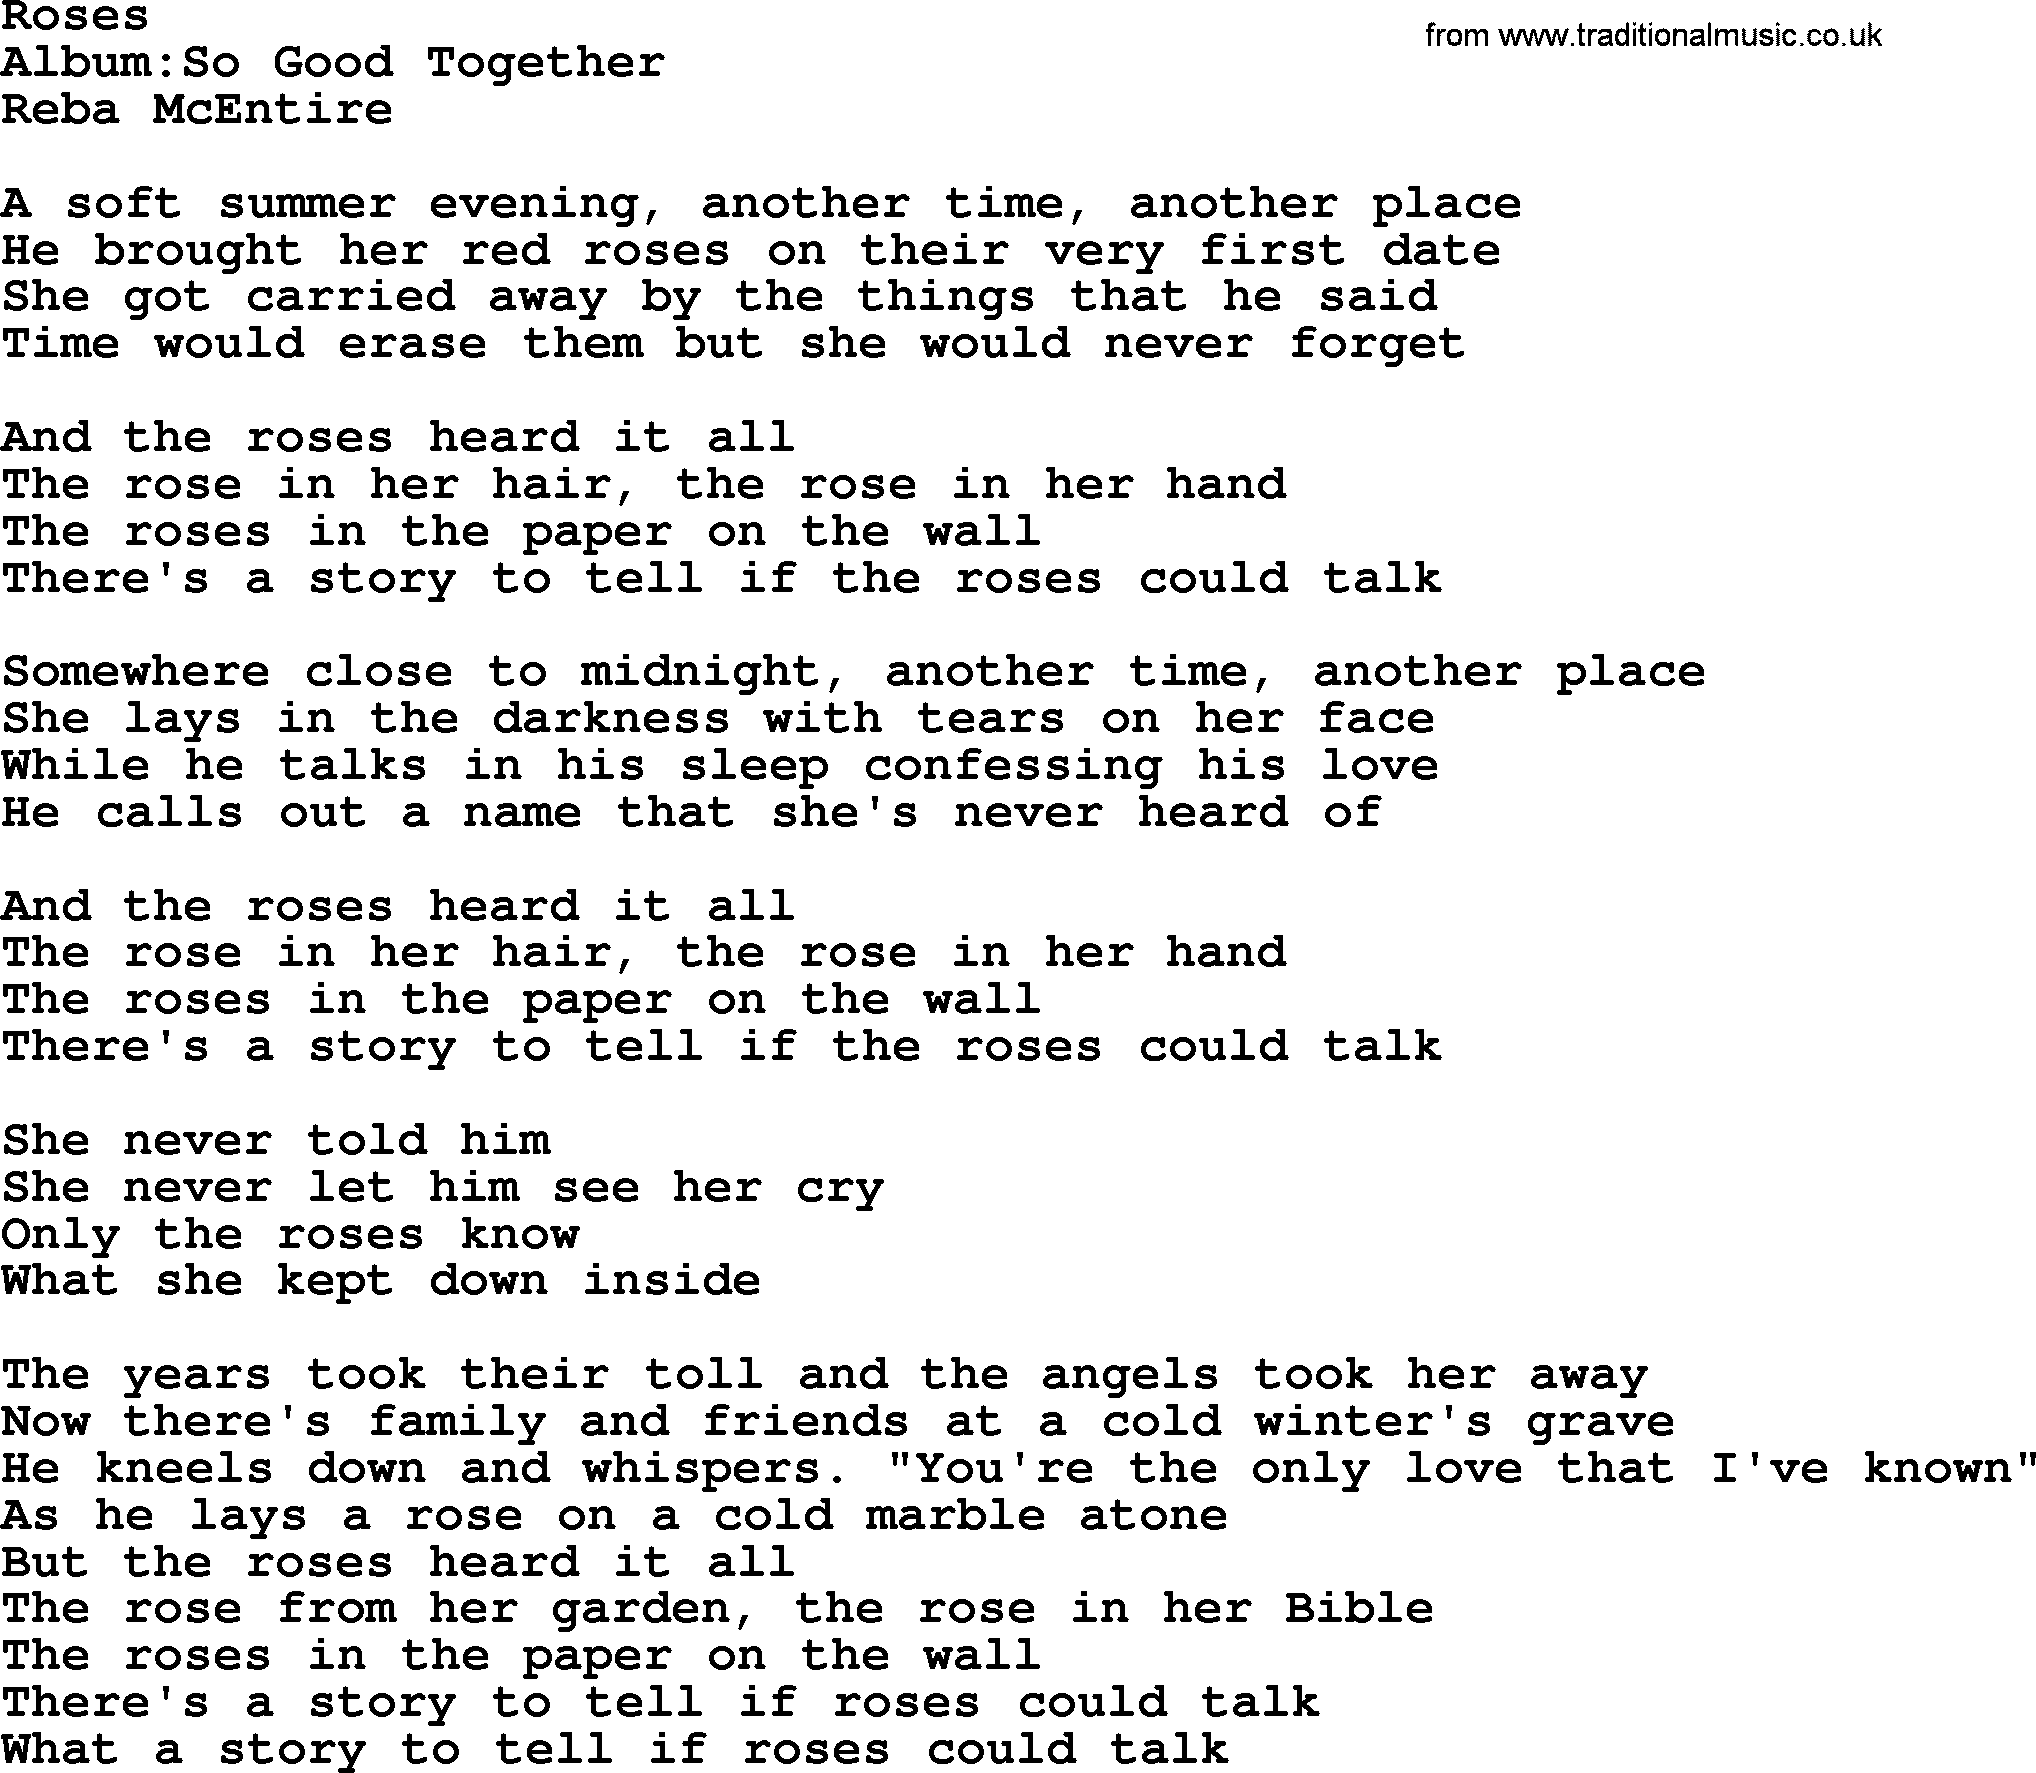 Reba McEntire song: Roses lyrics